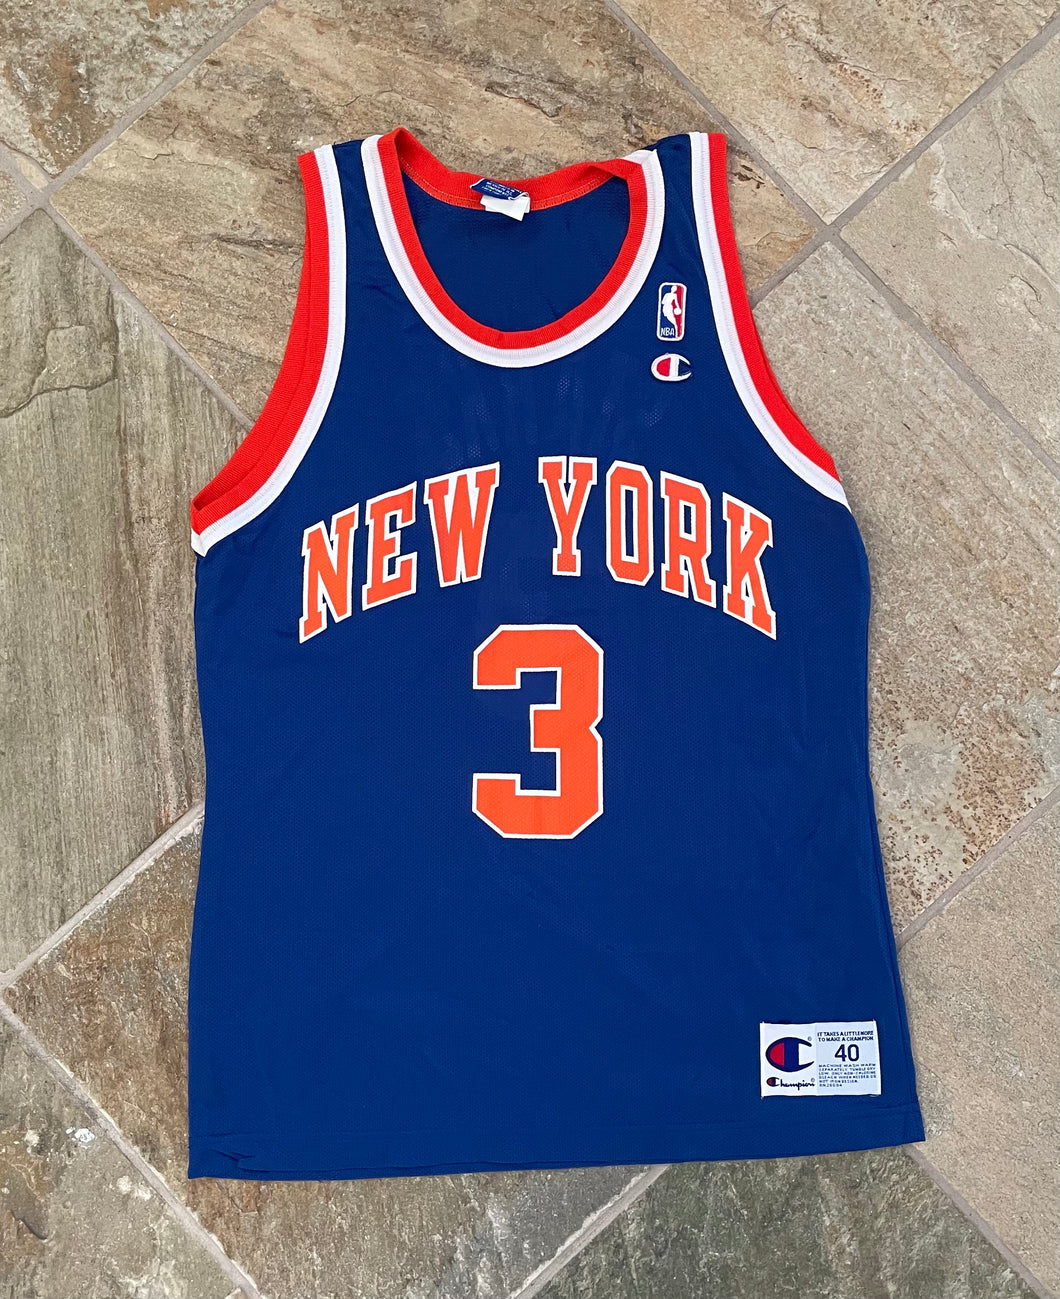 Vintage New York Knicks John Starks Champion Basketball Jersey, Size 40, Medium